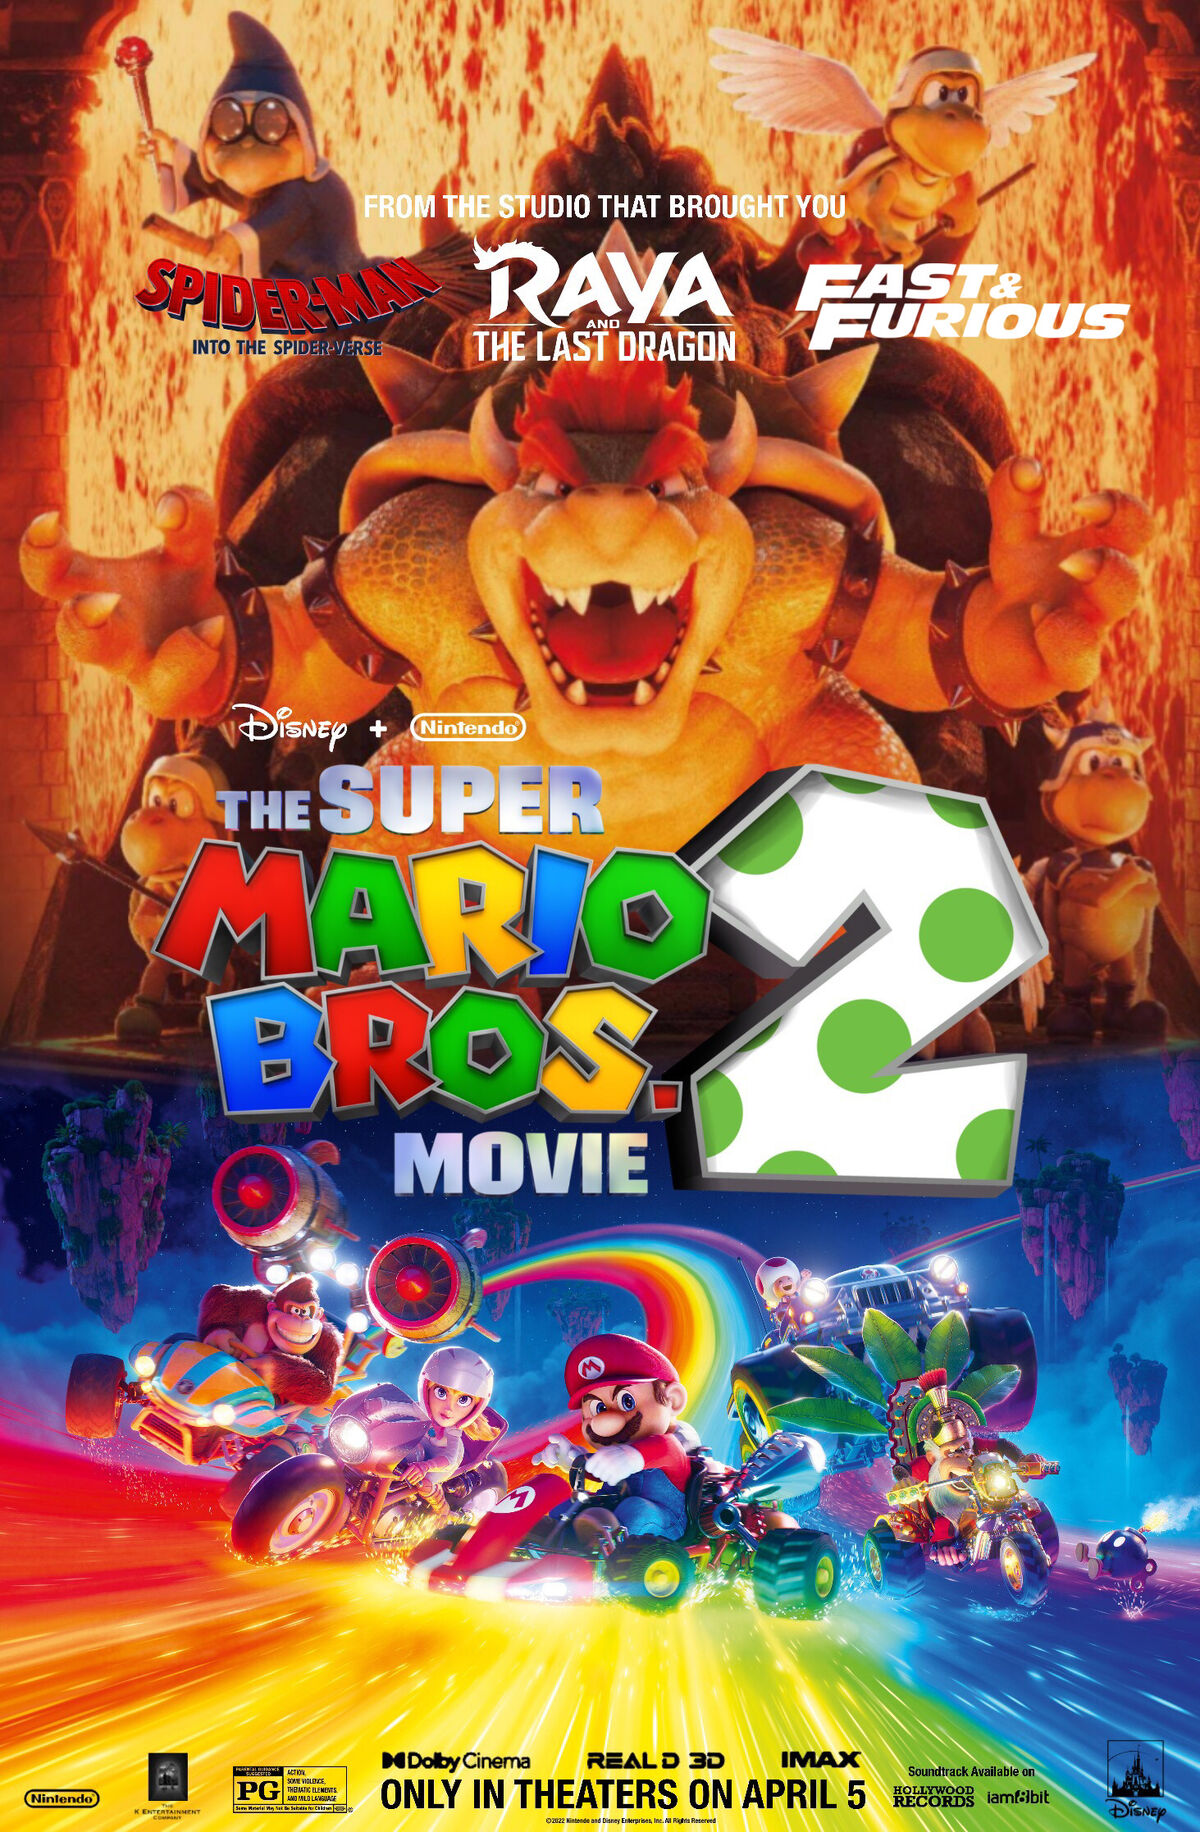 Chris Pratt's Super Mario Bros. movie officially delayed, Mario creator Shigeru  Miyamoto confirms via Nintendo's social media